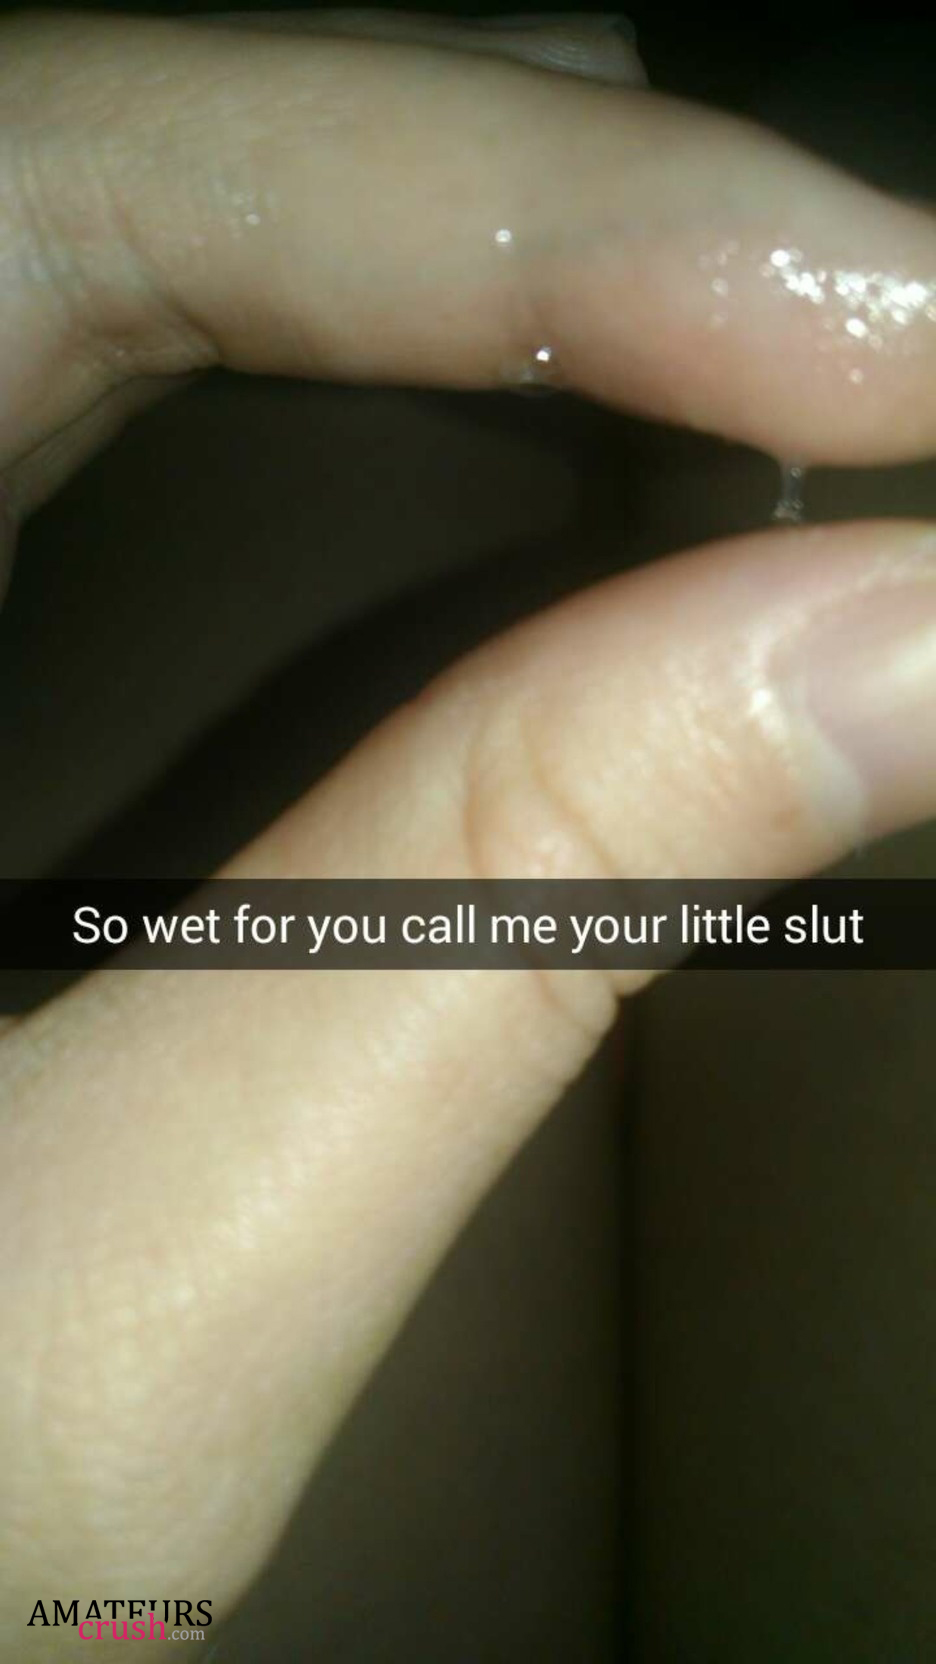 Snapchat slut teases with soaking panties